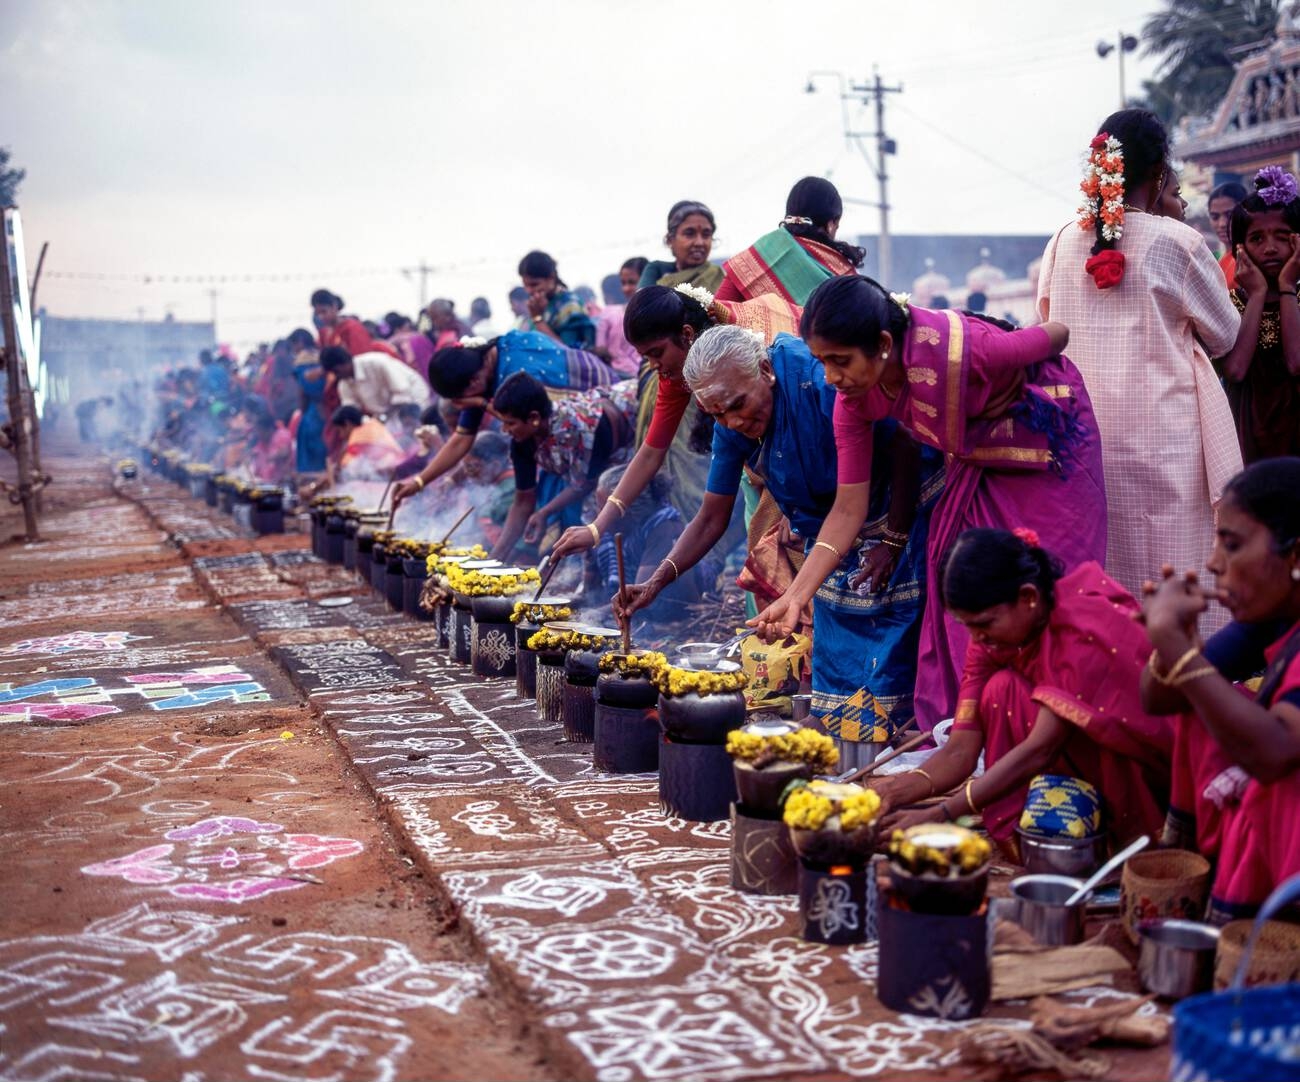 festival-in-sviganga-tamilnadu